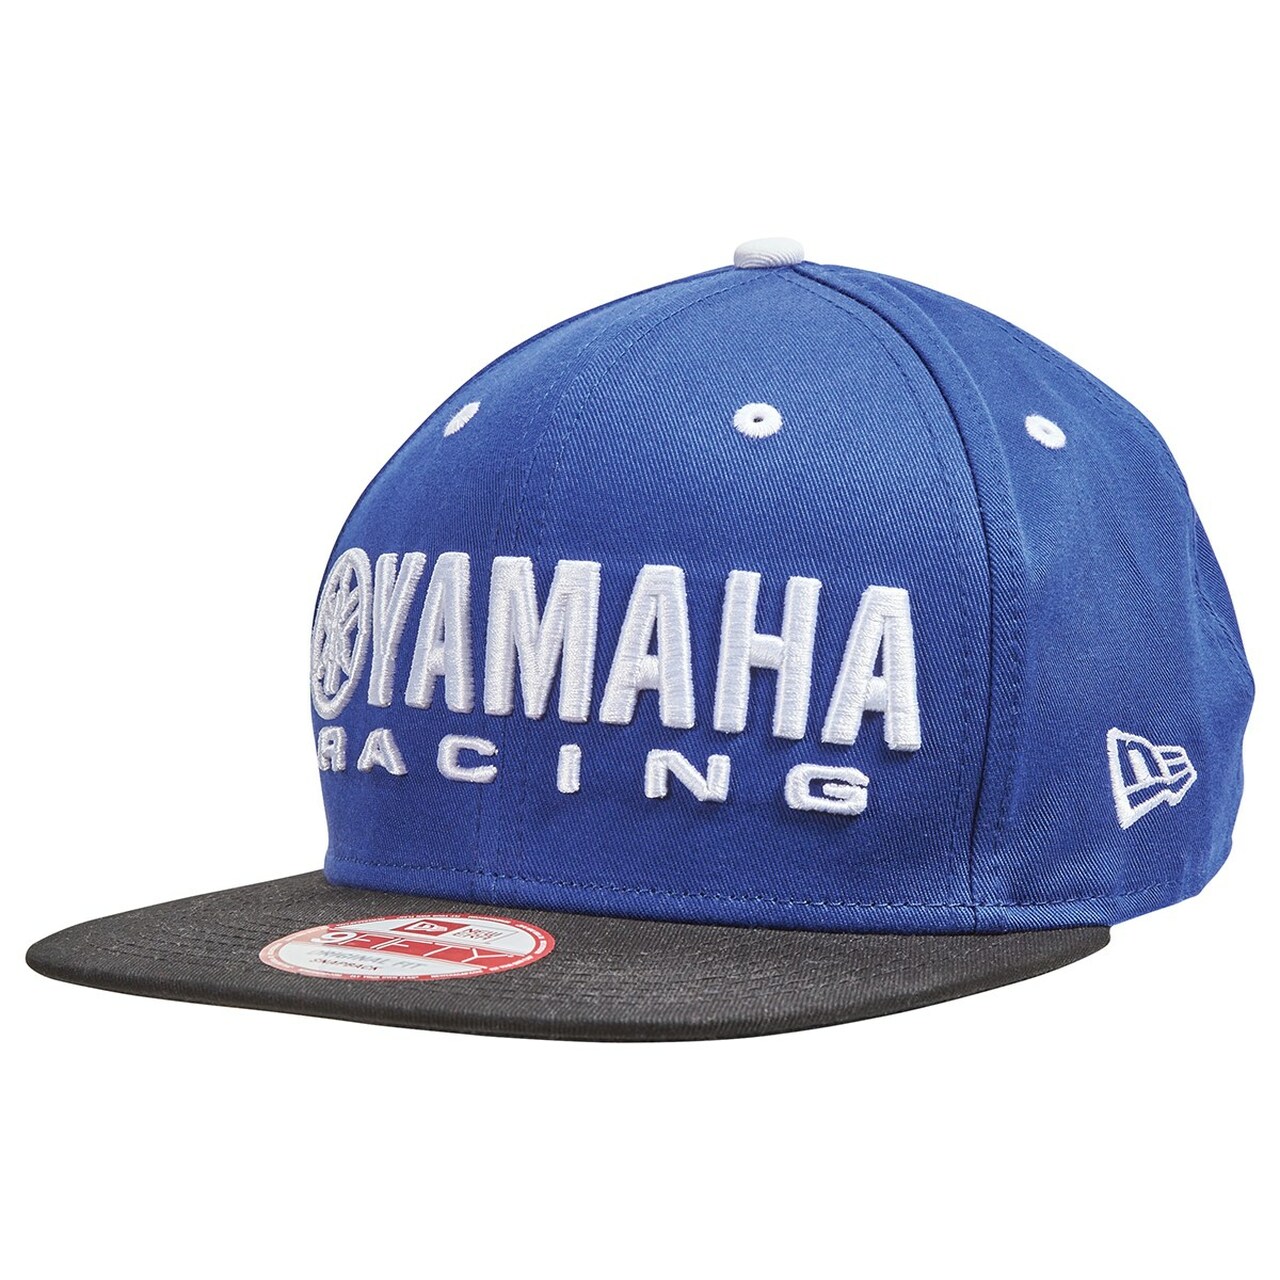 Main image of 2021 Yamaha Racing New Era Flatbill Hat (Blue)